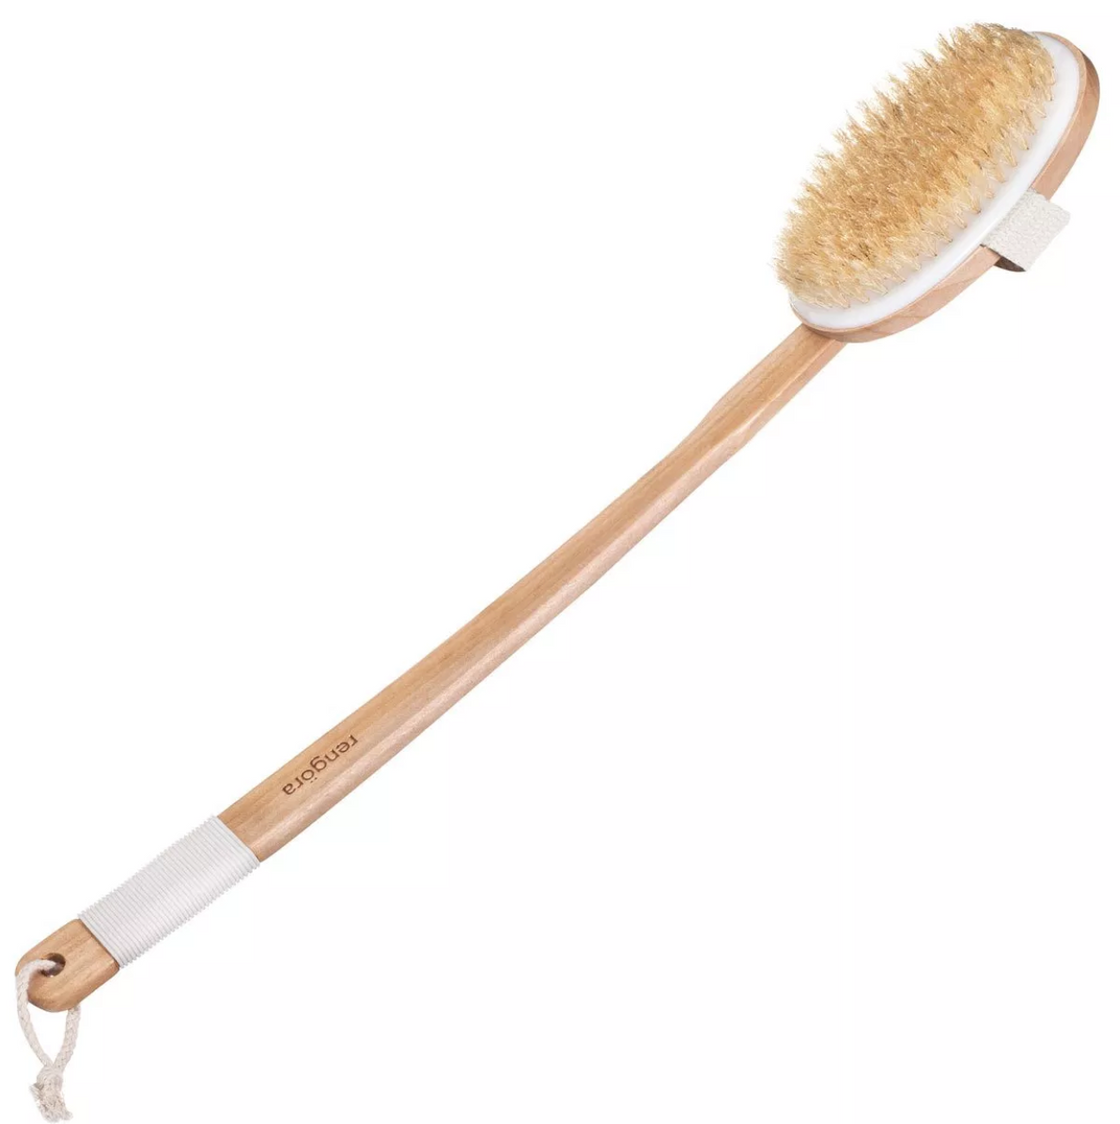 Extra long bath brush with boar bristles